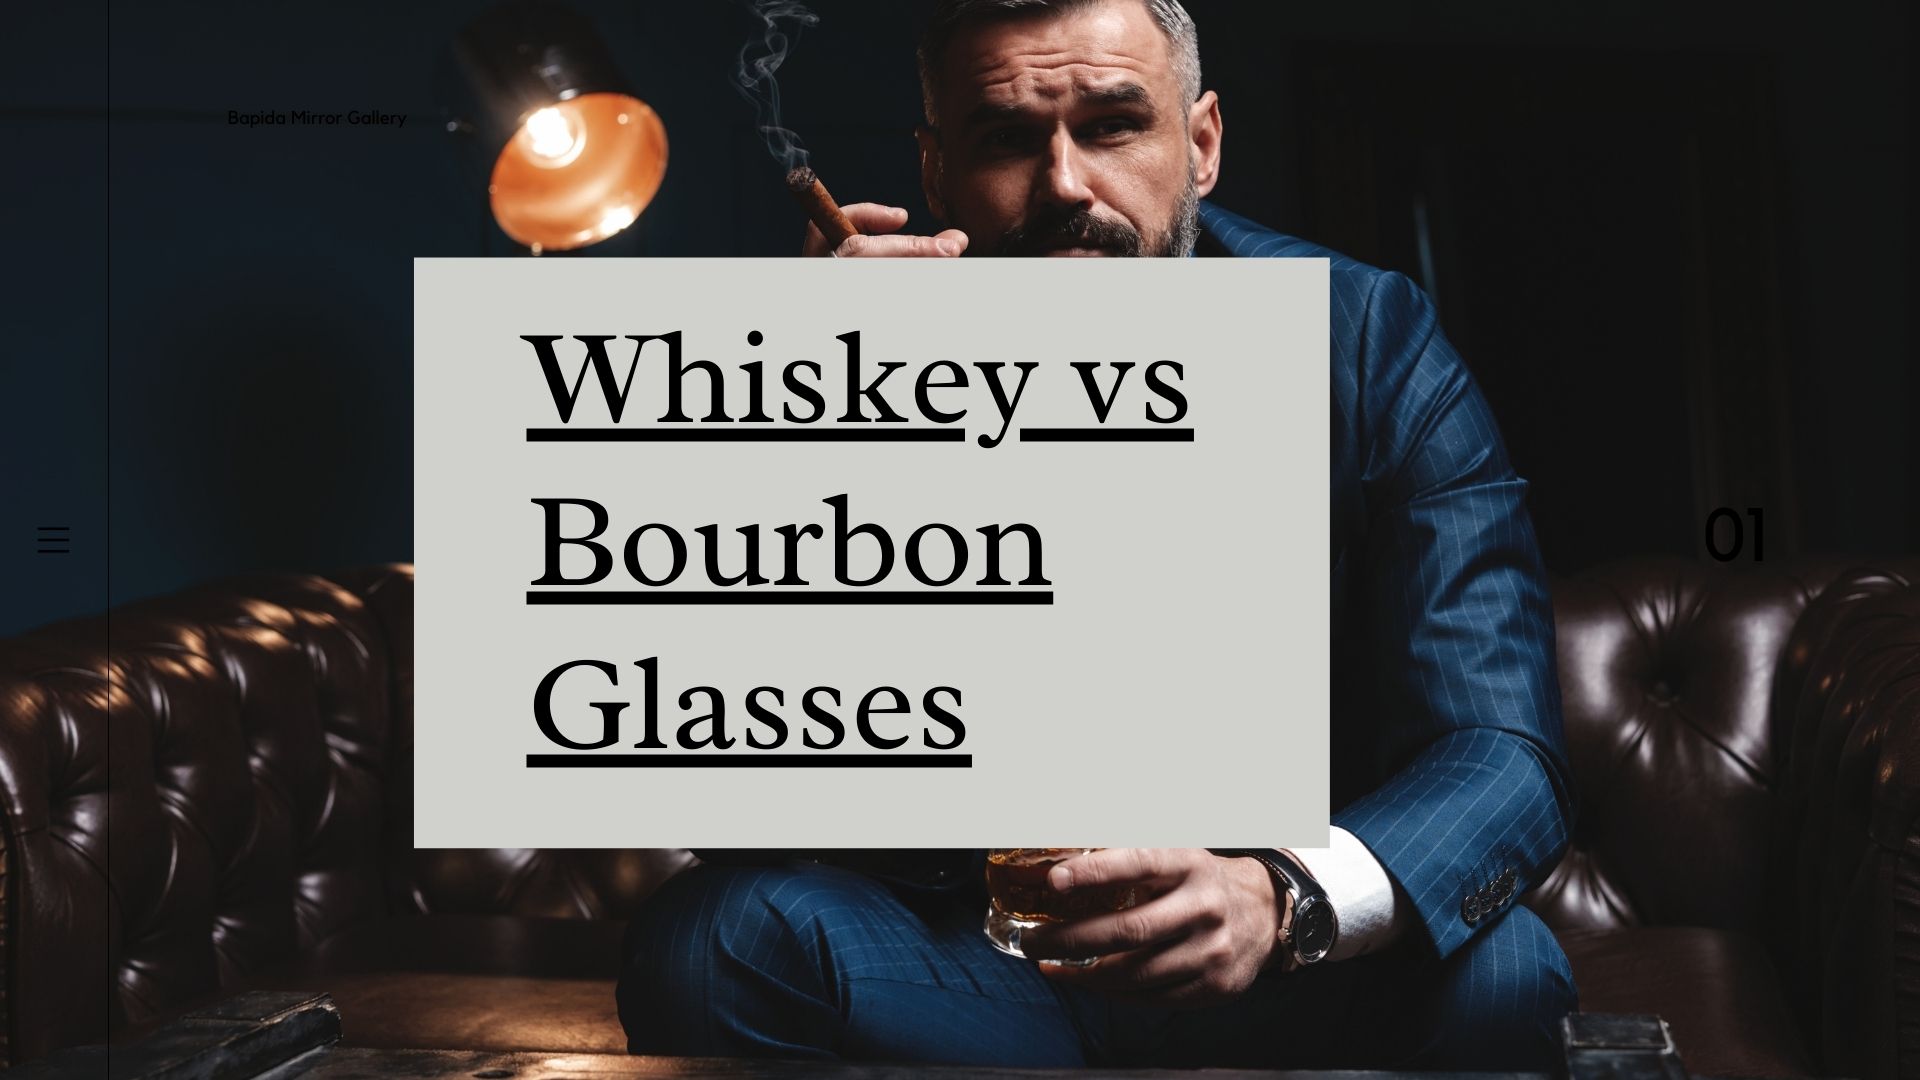 Whiskey vs Bourbon glasses